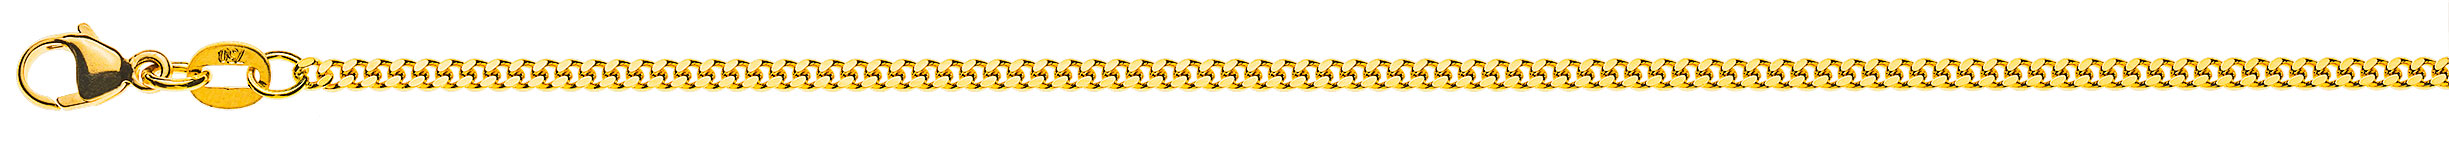 AURONOS Prestige Necklace yellow gold 18K curb chain polished 60cm 2.0mm